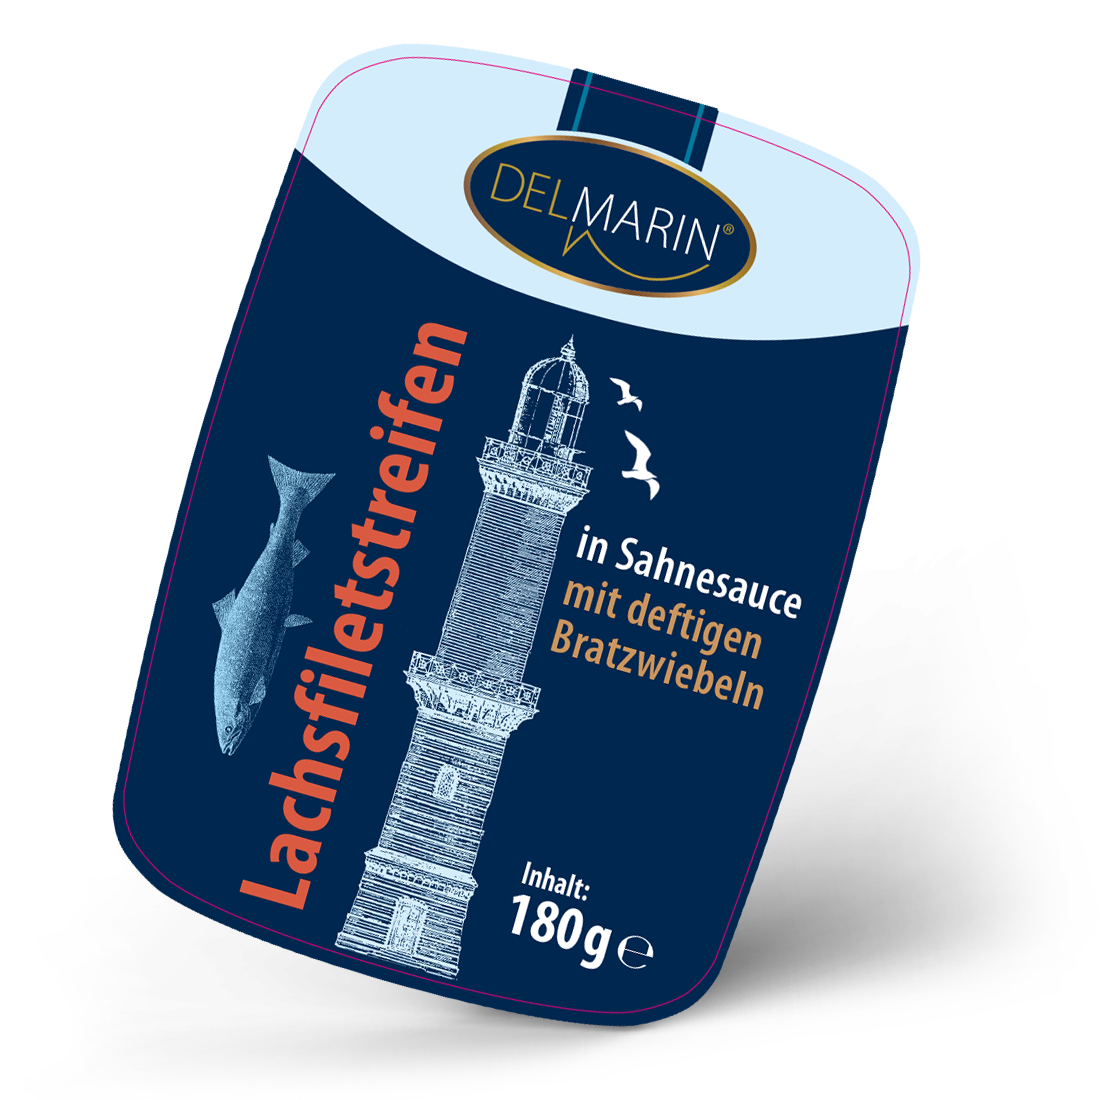 Del Marin GmbH Marke Verpackungsdesign